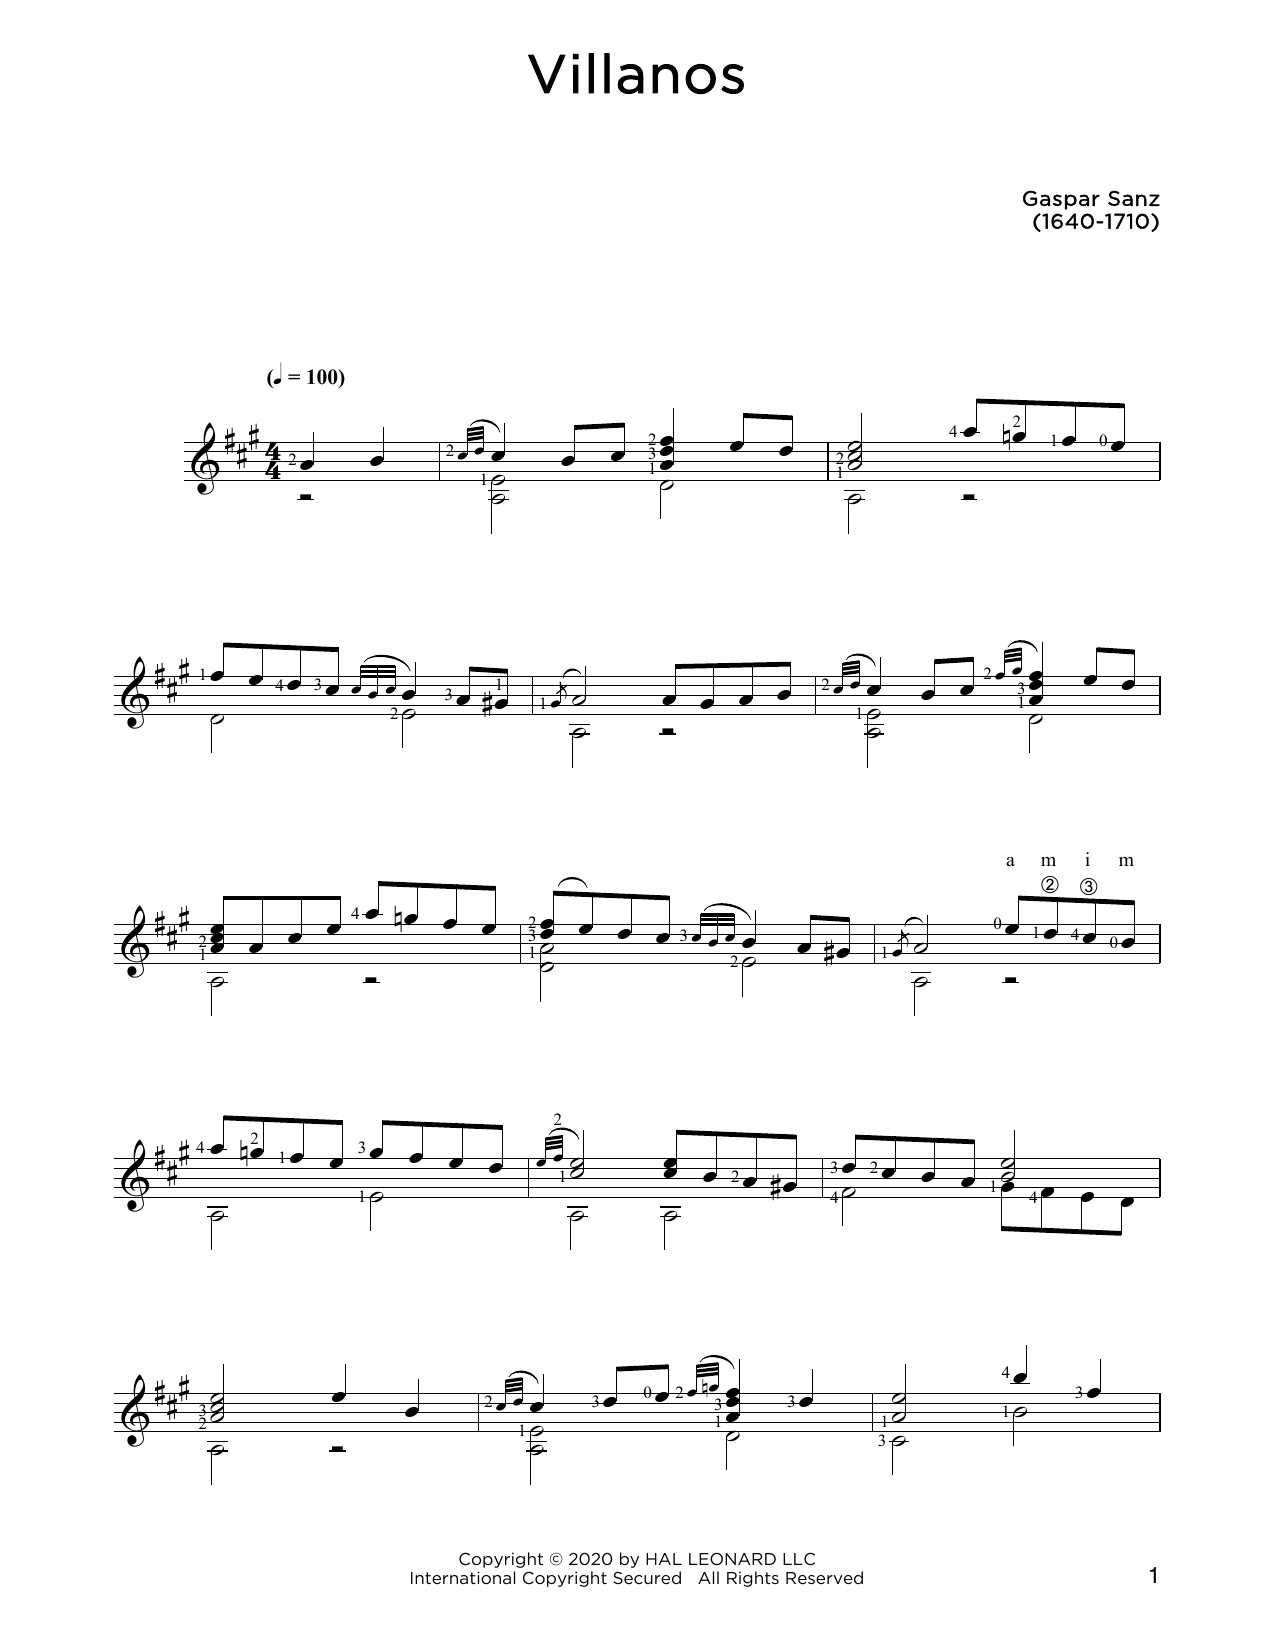 Gaspar Sanz Villanos sheet music notes and chords arranged for Solo Guitar